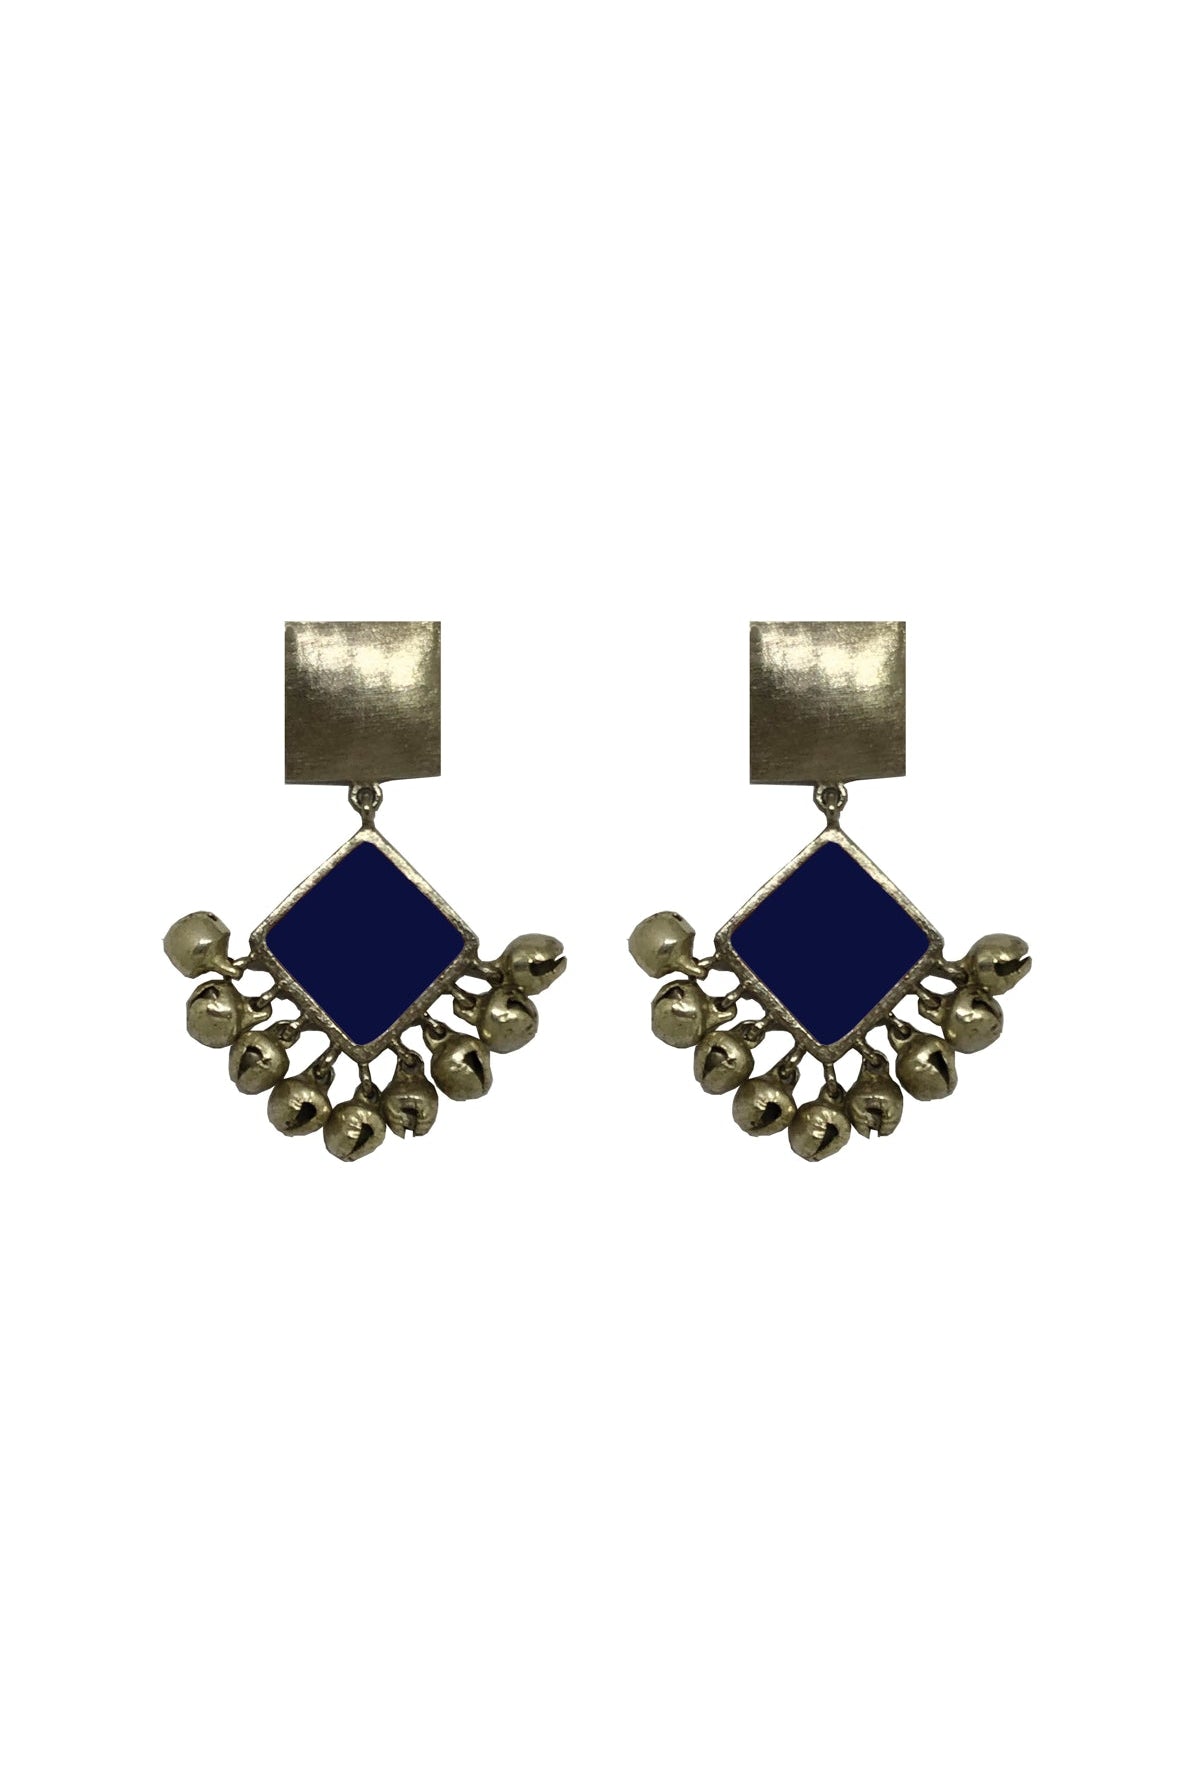 Two Tier Diamond Earrings - Navy Blue - CiceroniAaree